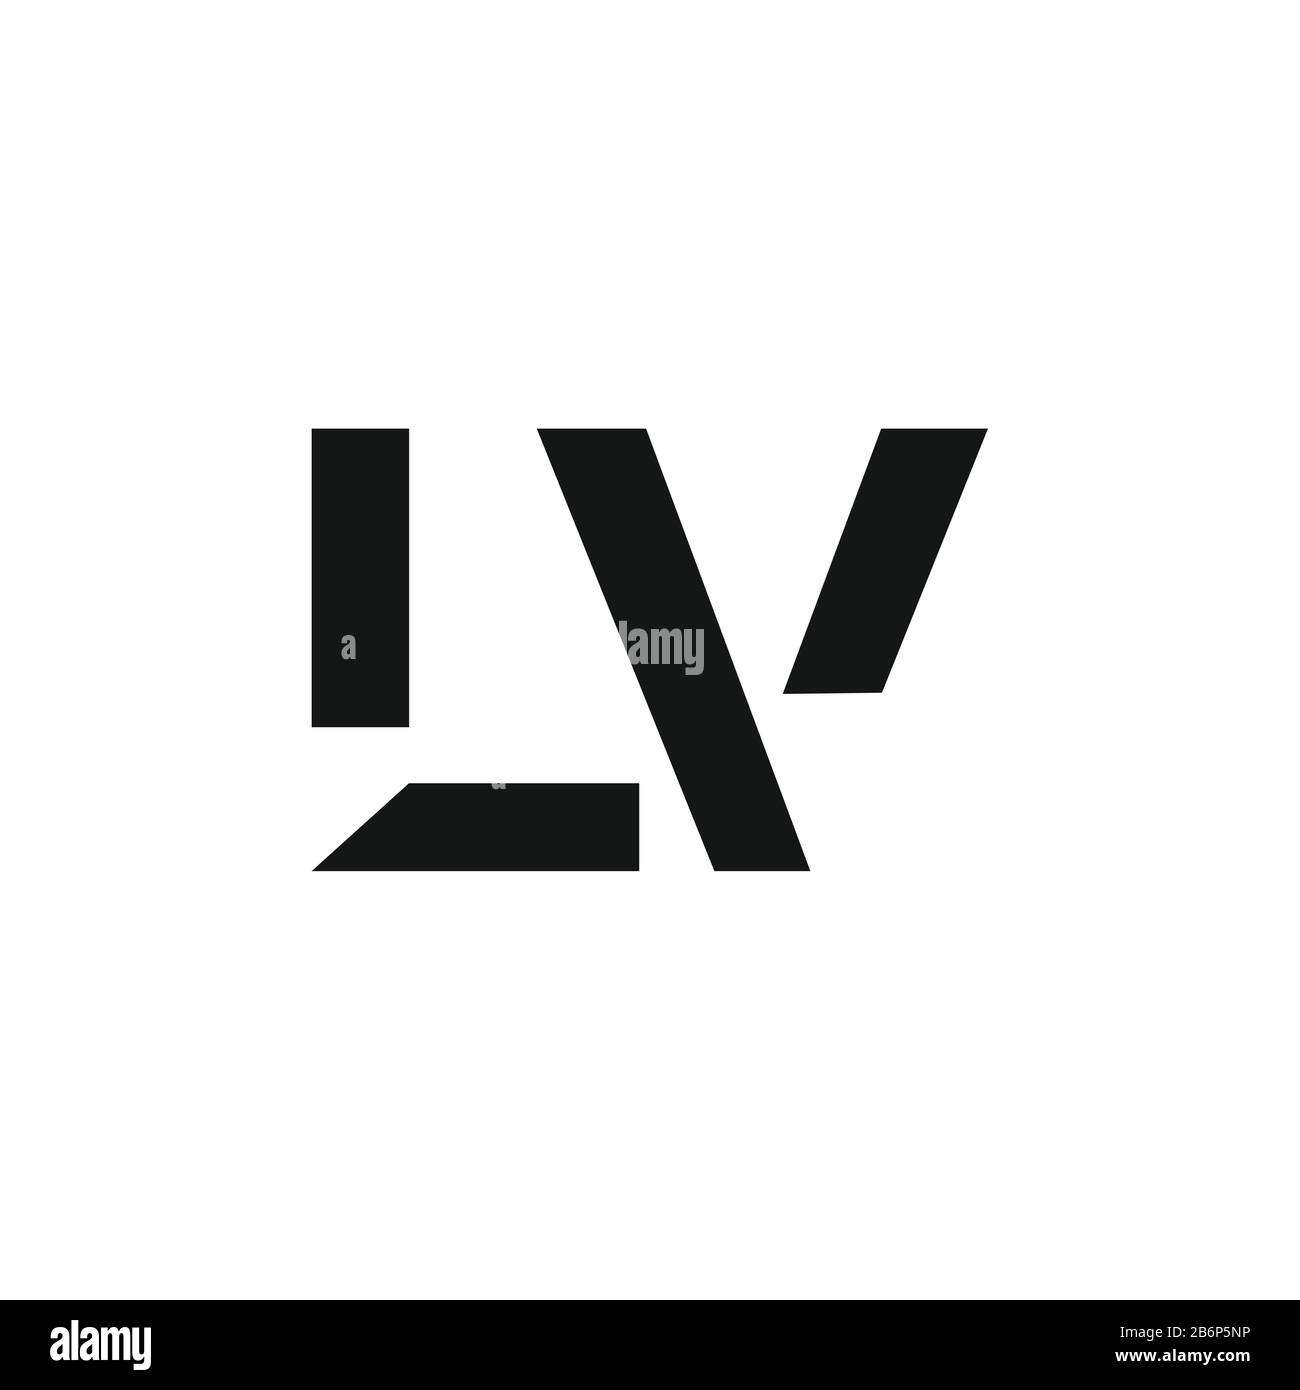 Lv modern letter logo design with swoosh Vector Image